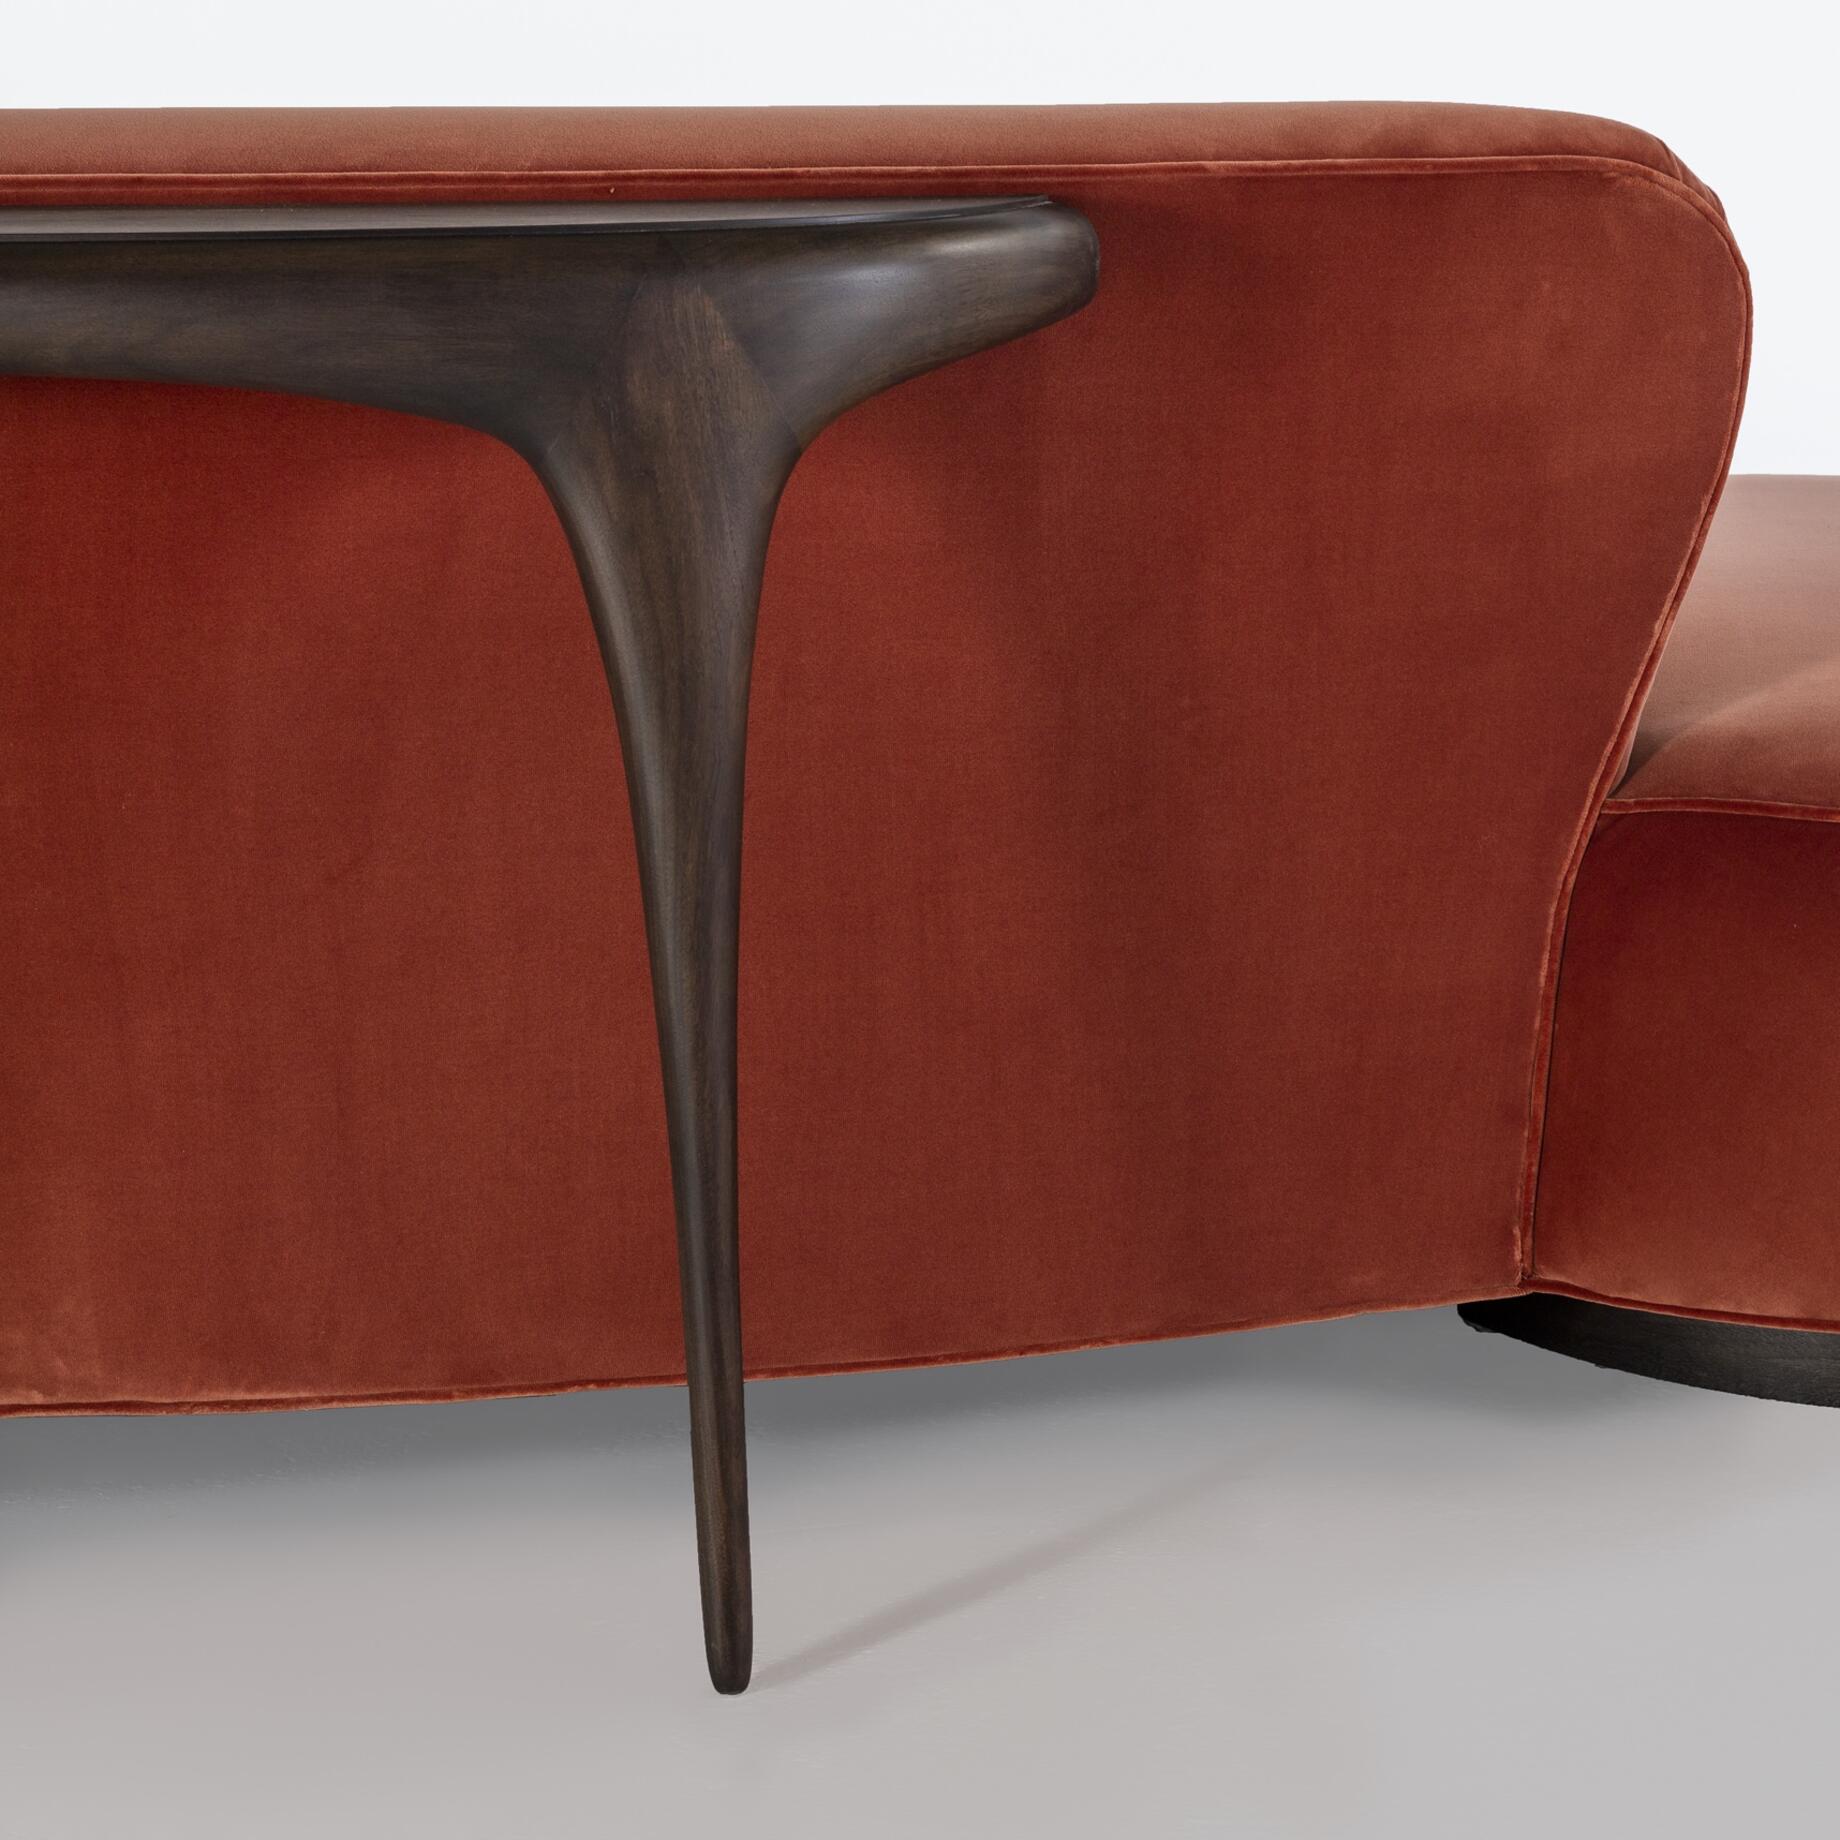 Sculpted Sofa Table